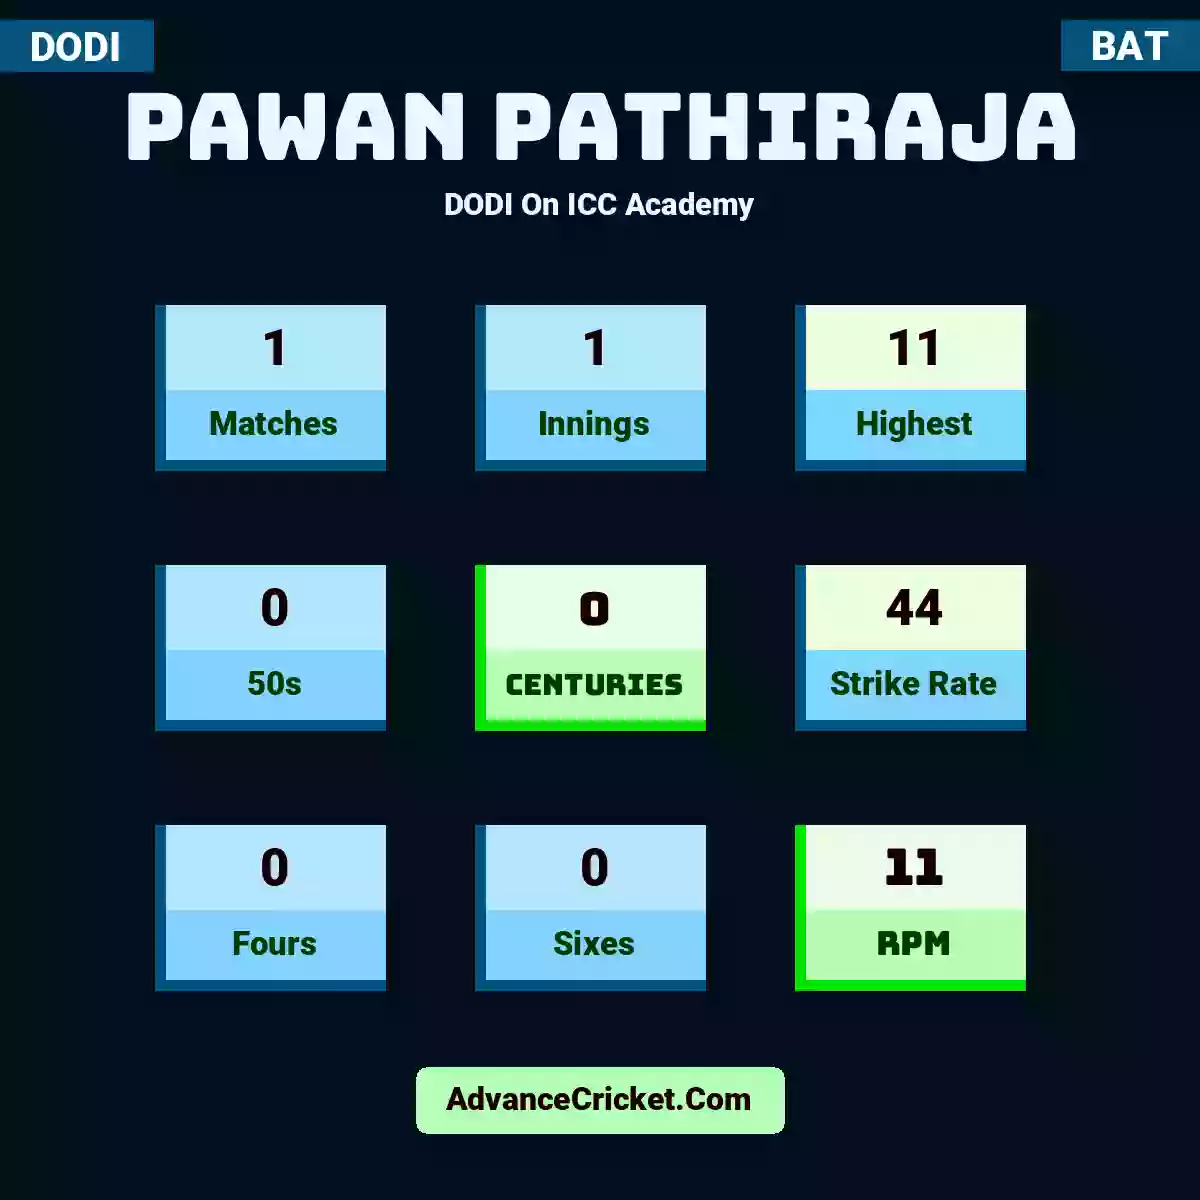 Pawan Pathiraja DODI  On ICC Academy, Pawan Pathiraja played 1 matches, scored 11 runs as highest, 0 half-centuries, and 0 centuries, with a strike rate of 44. P.Pathiraja hit 0 fours and 0 sixes, with an RPM of 11.